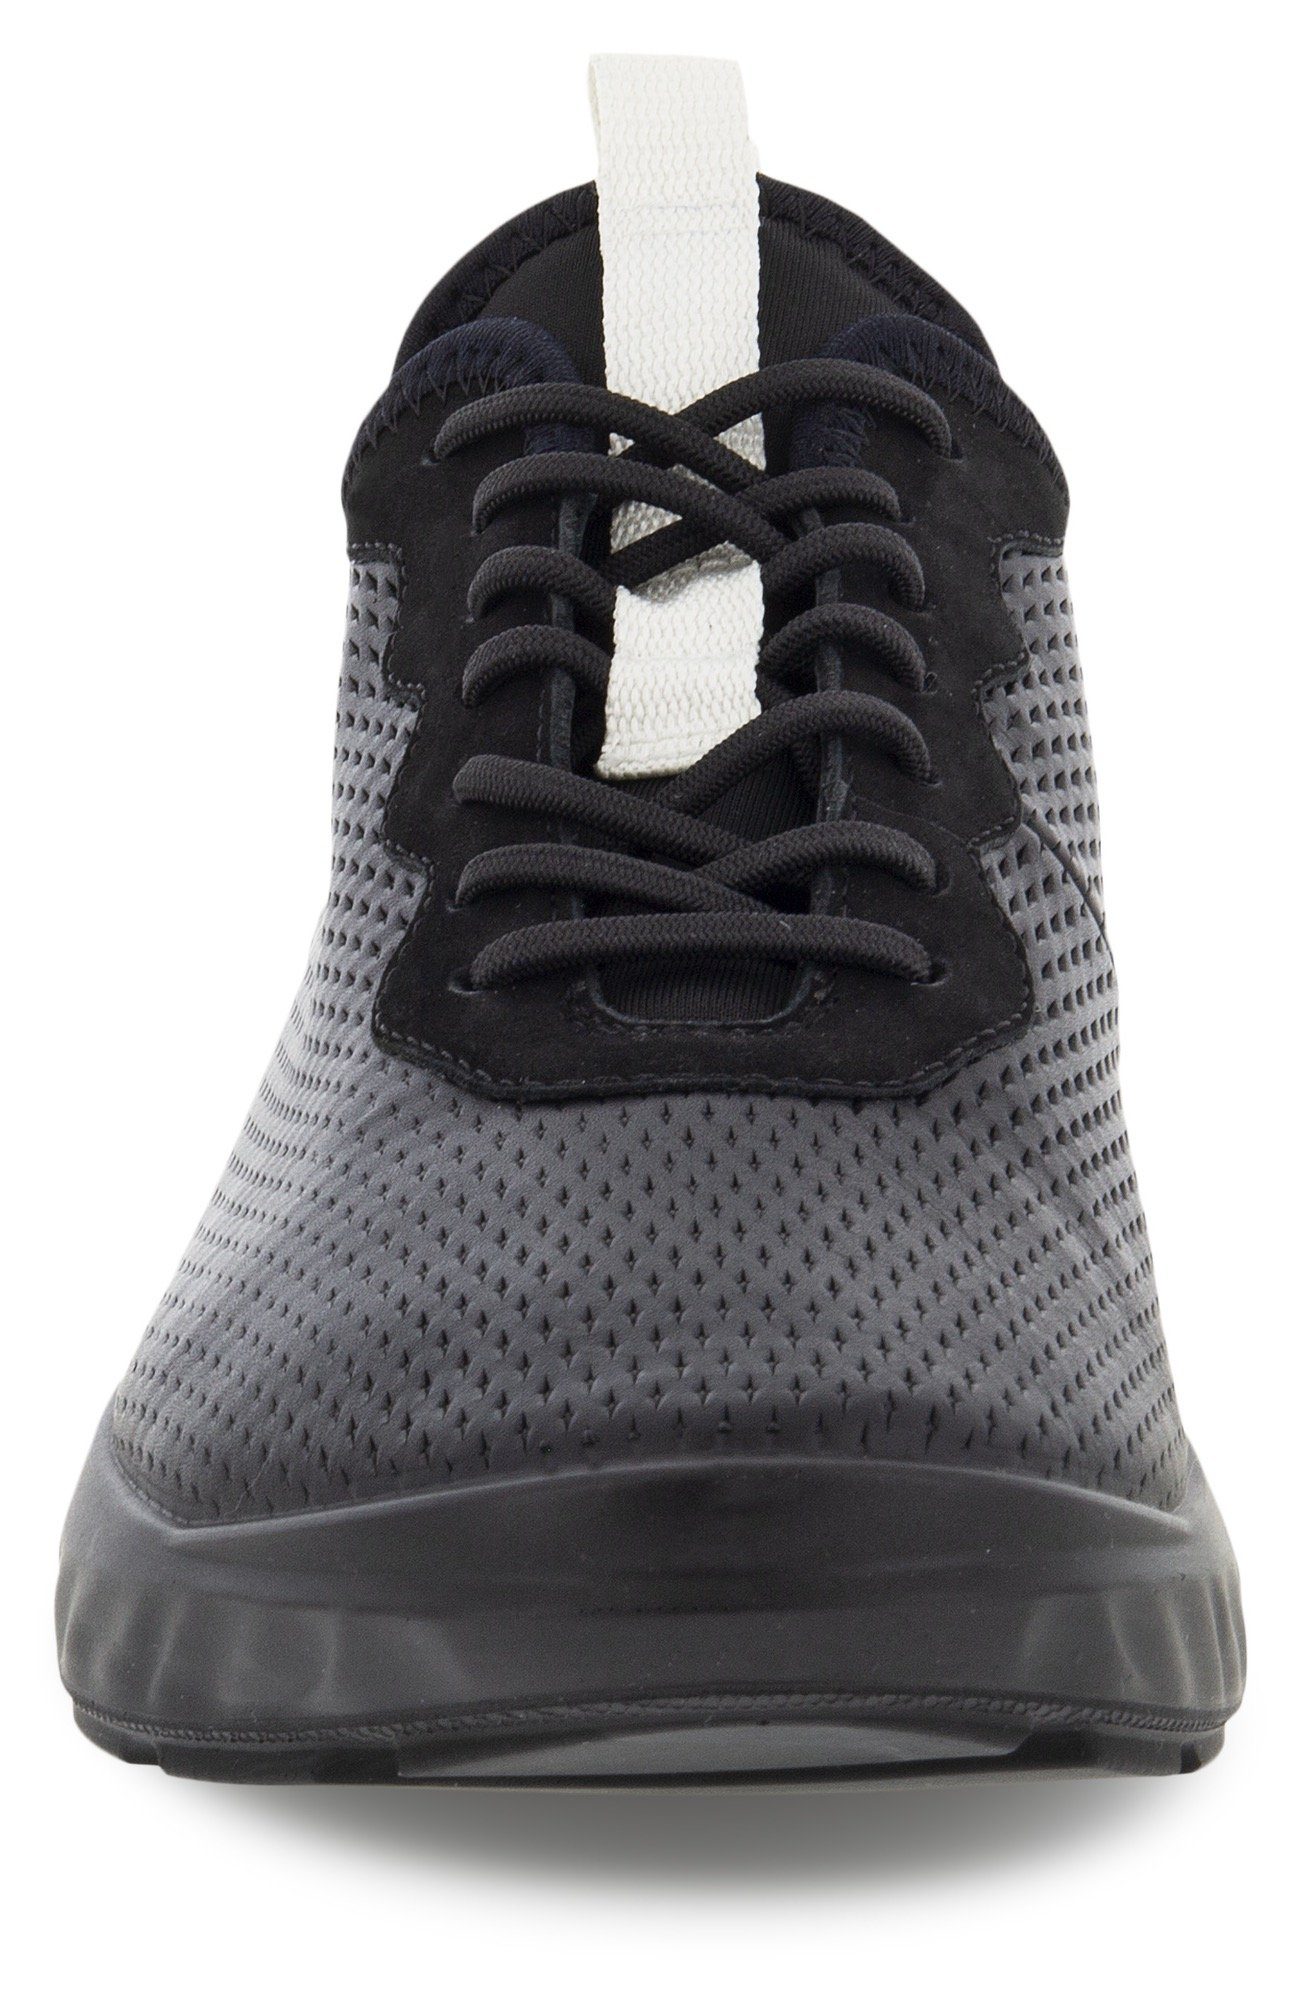 schwarz weiß Ecco Look in ATH-1FW Sneaker sportivem